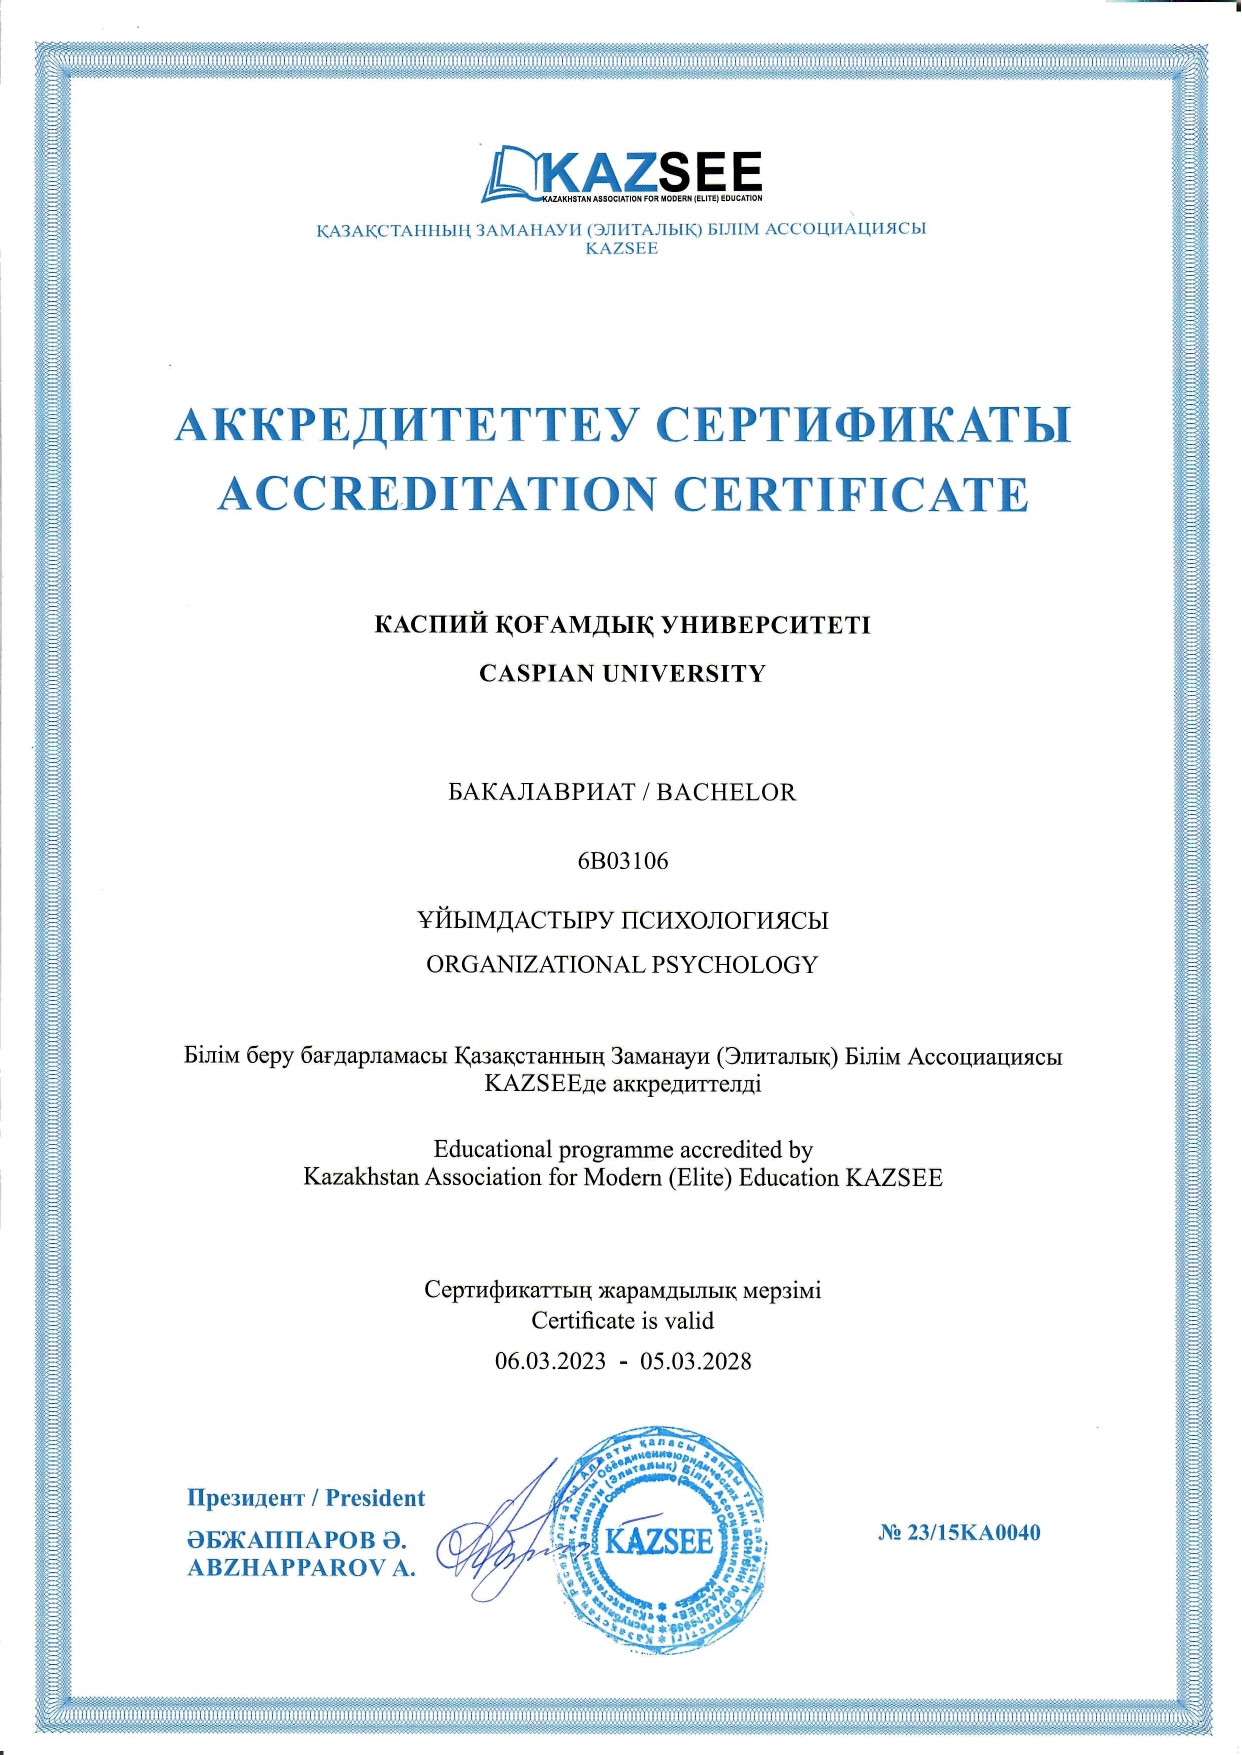 Certificate_Caspian university (1) (1)_page-0002